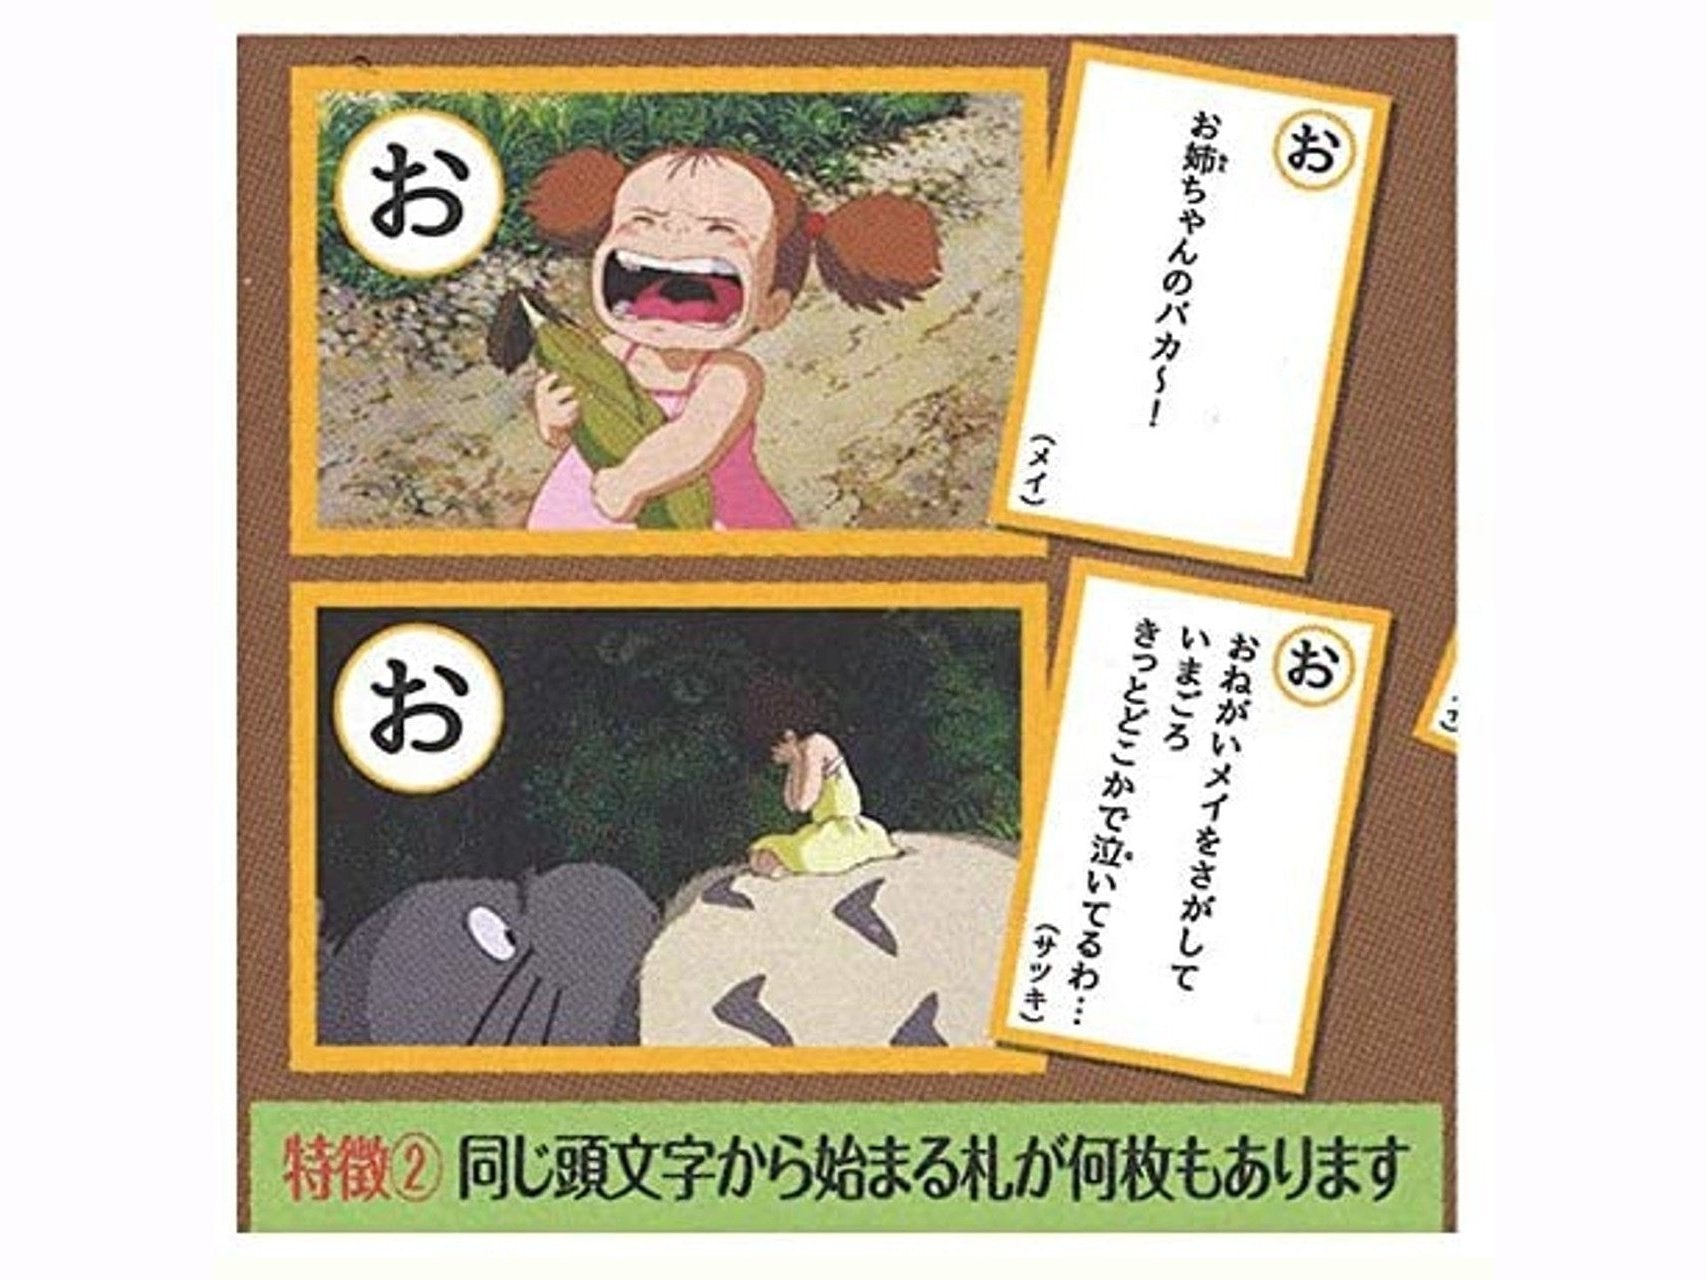 Ensky My Neighbour Totoro Dialogue Karuta Japanese Playing Cards